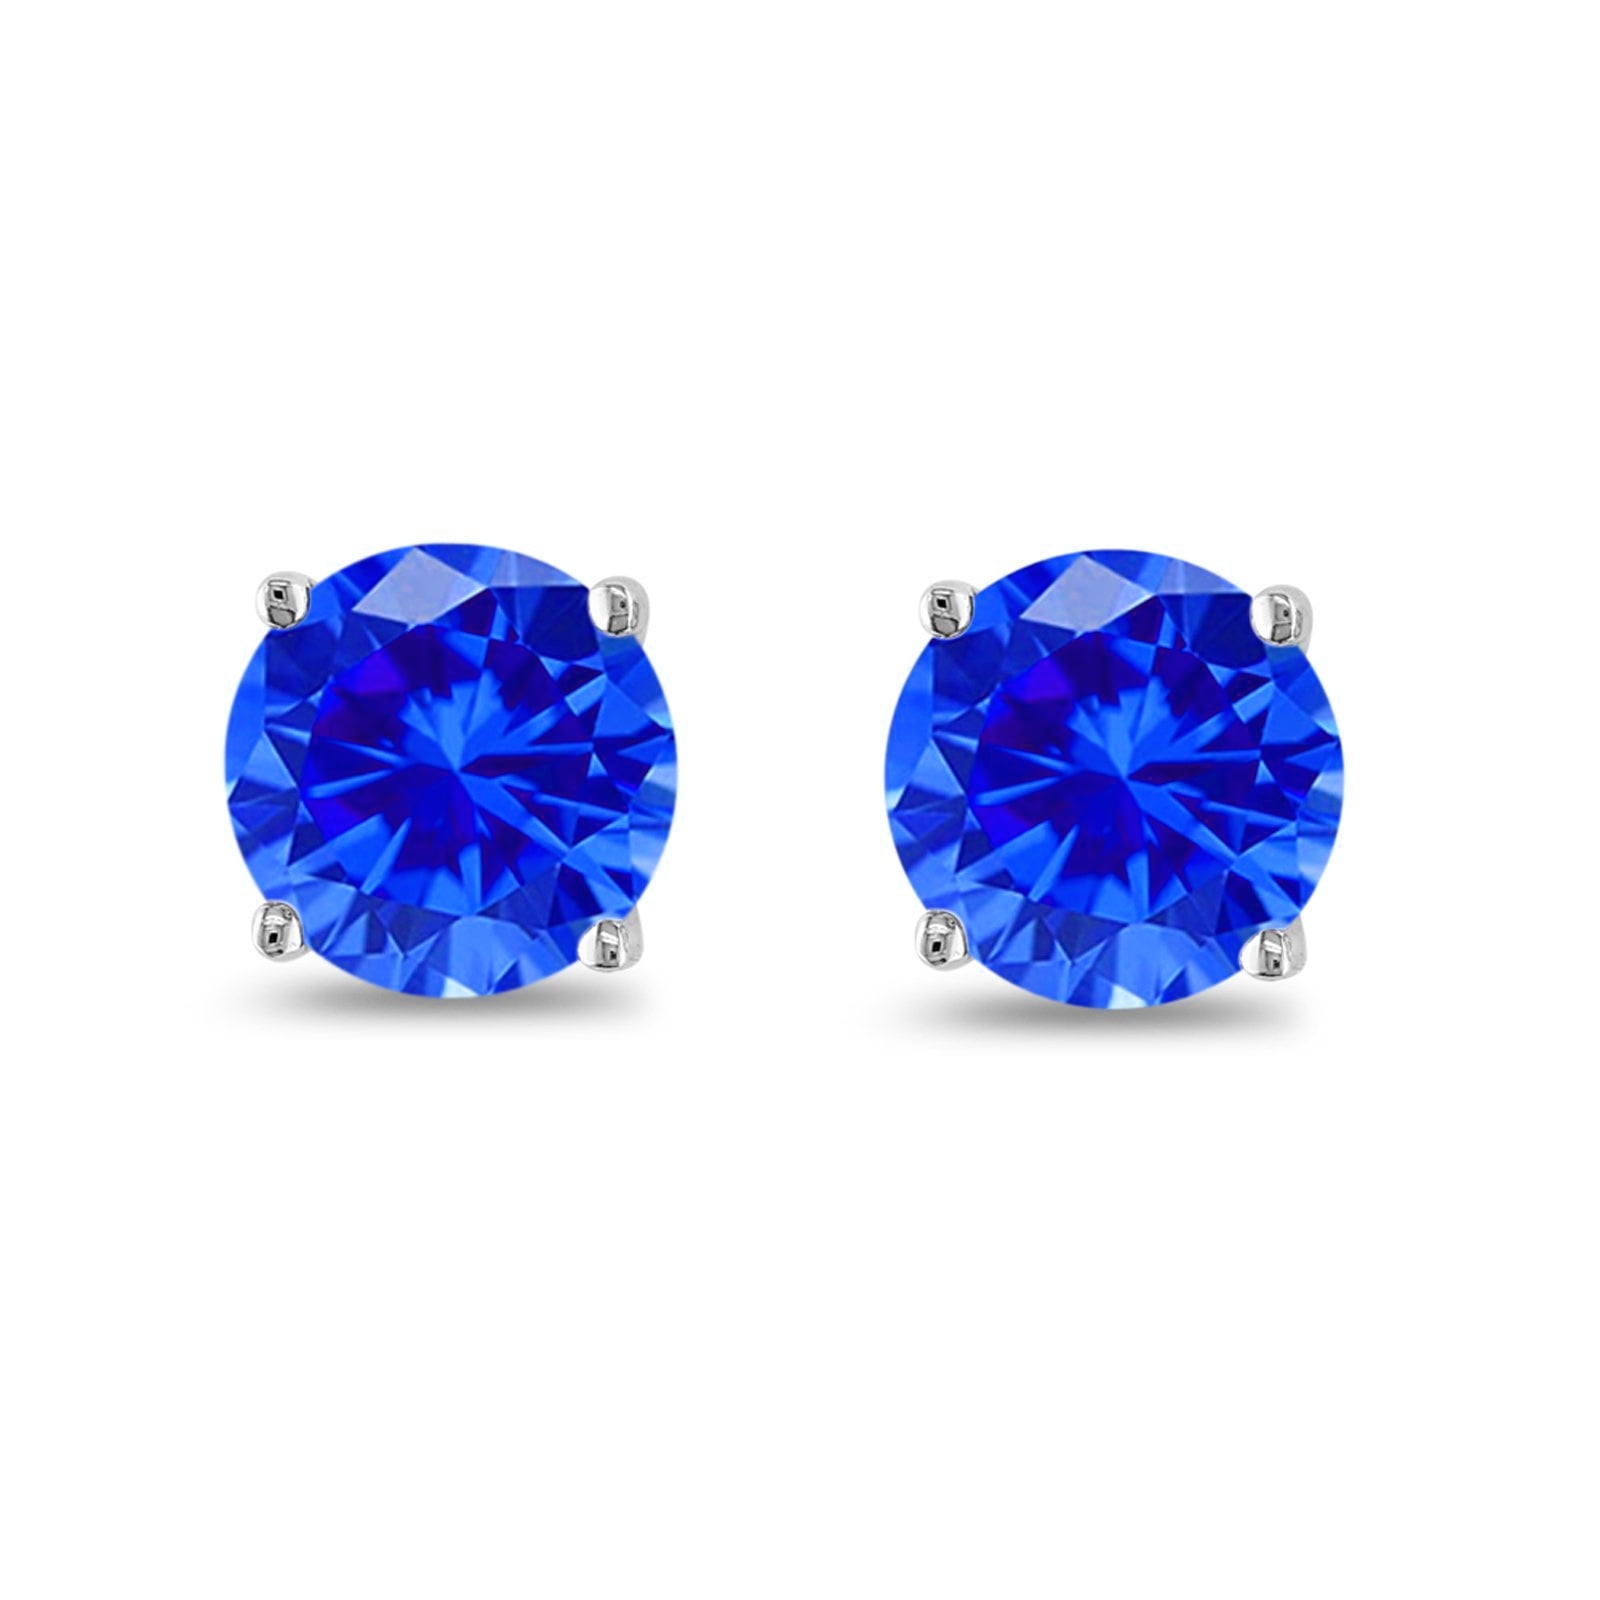 Sapphire Earrings Gemstone Earrings September Birthstone Earrings Silver and Sapphire Sapphire Studs Sterling Silver Gift Ideas